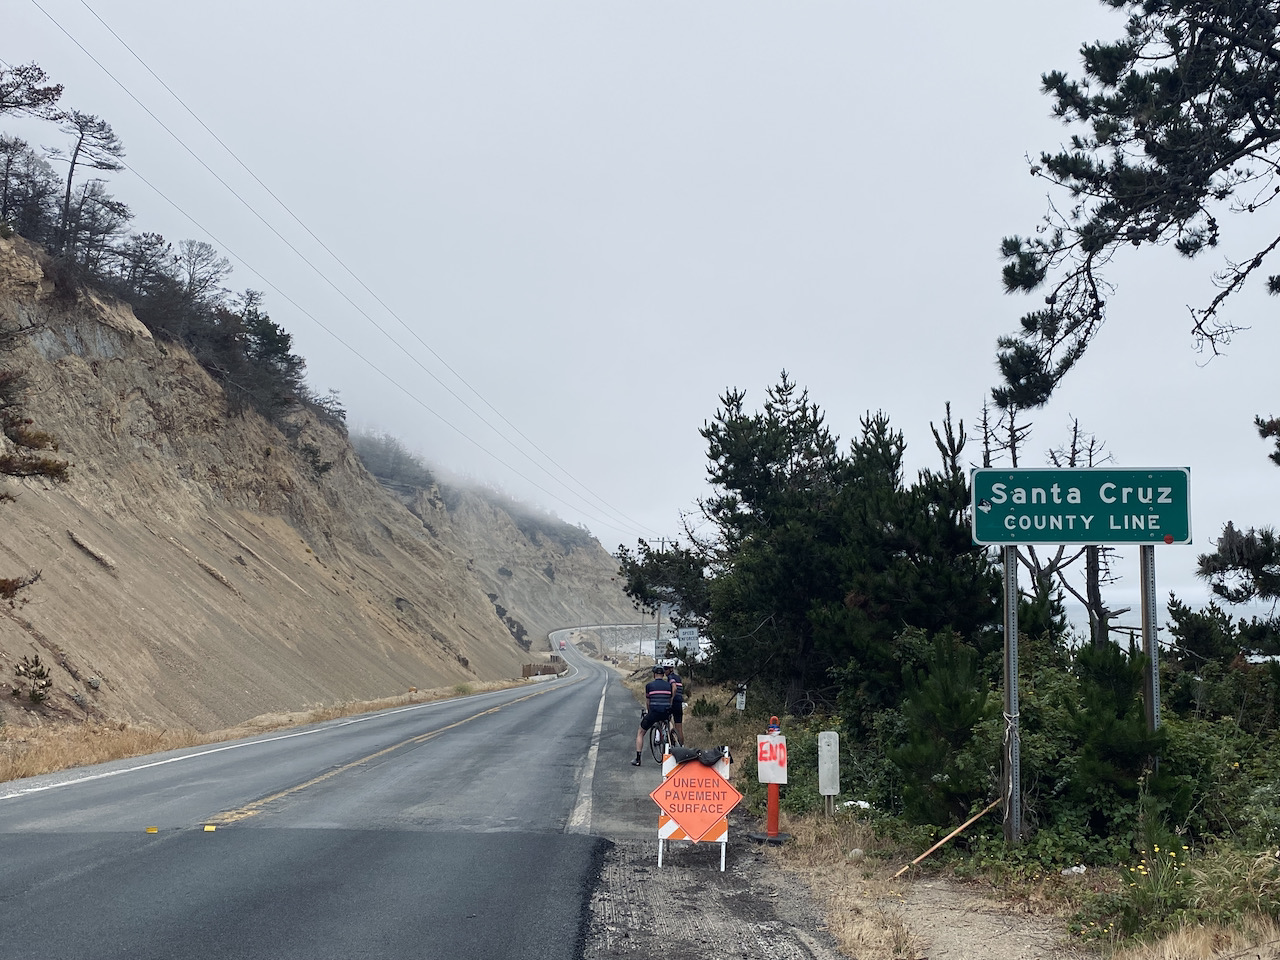 The Santa Cruz county line sign along Cabrillo highway near Davenport, CA